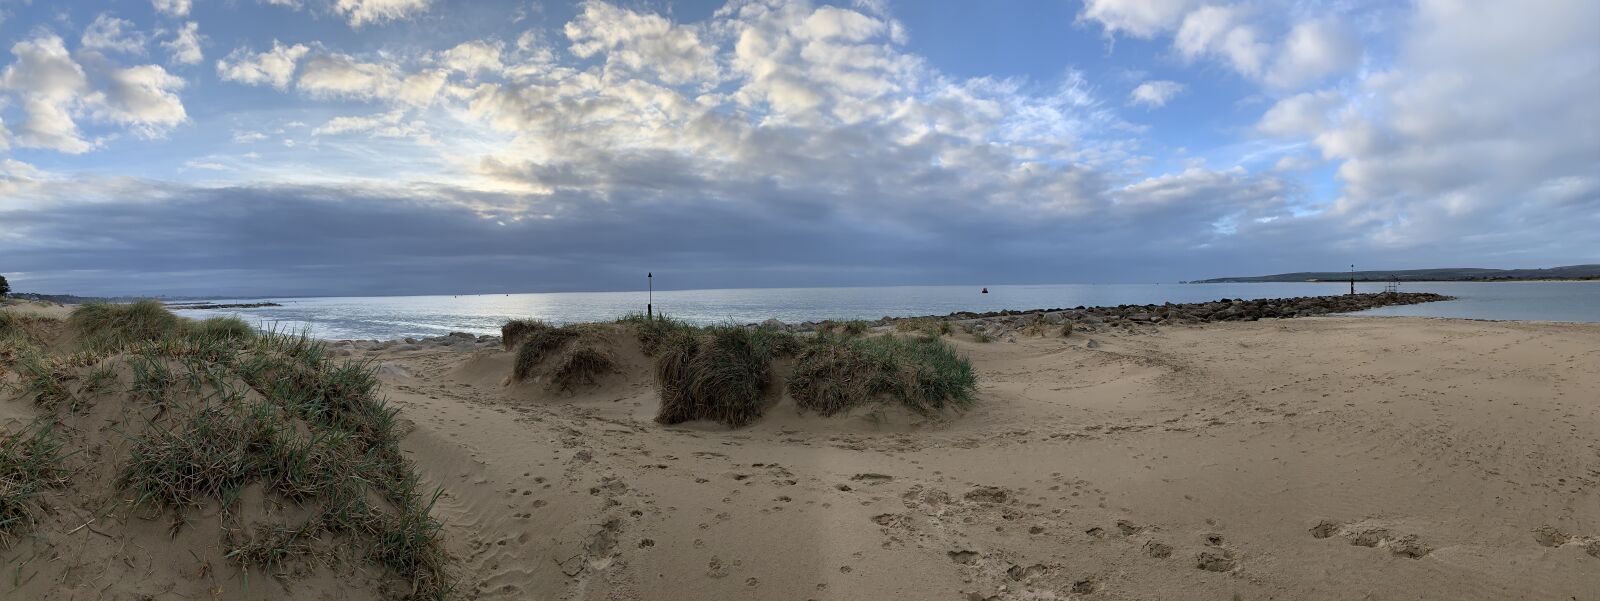 Apple iPhone XS Max sample photo. Beach, clouds, sunrise photography